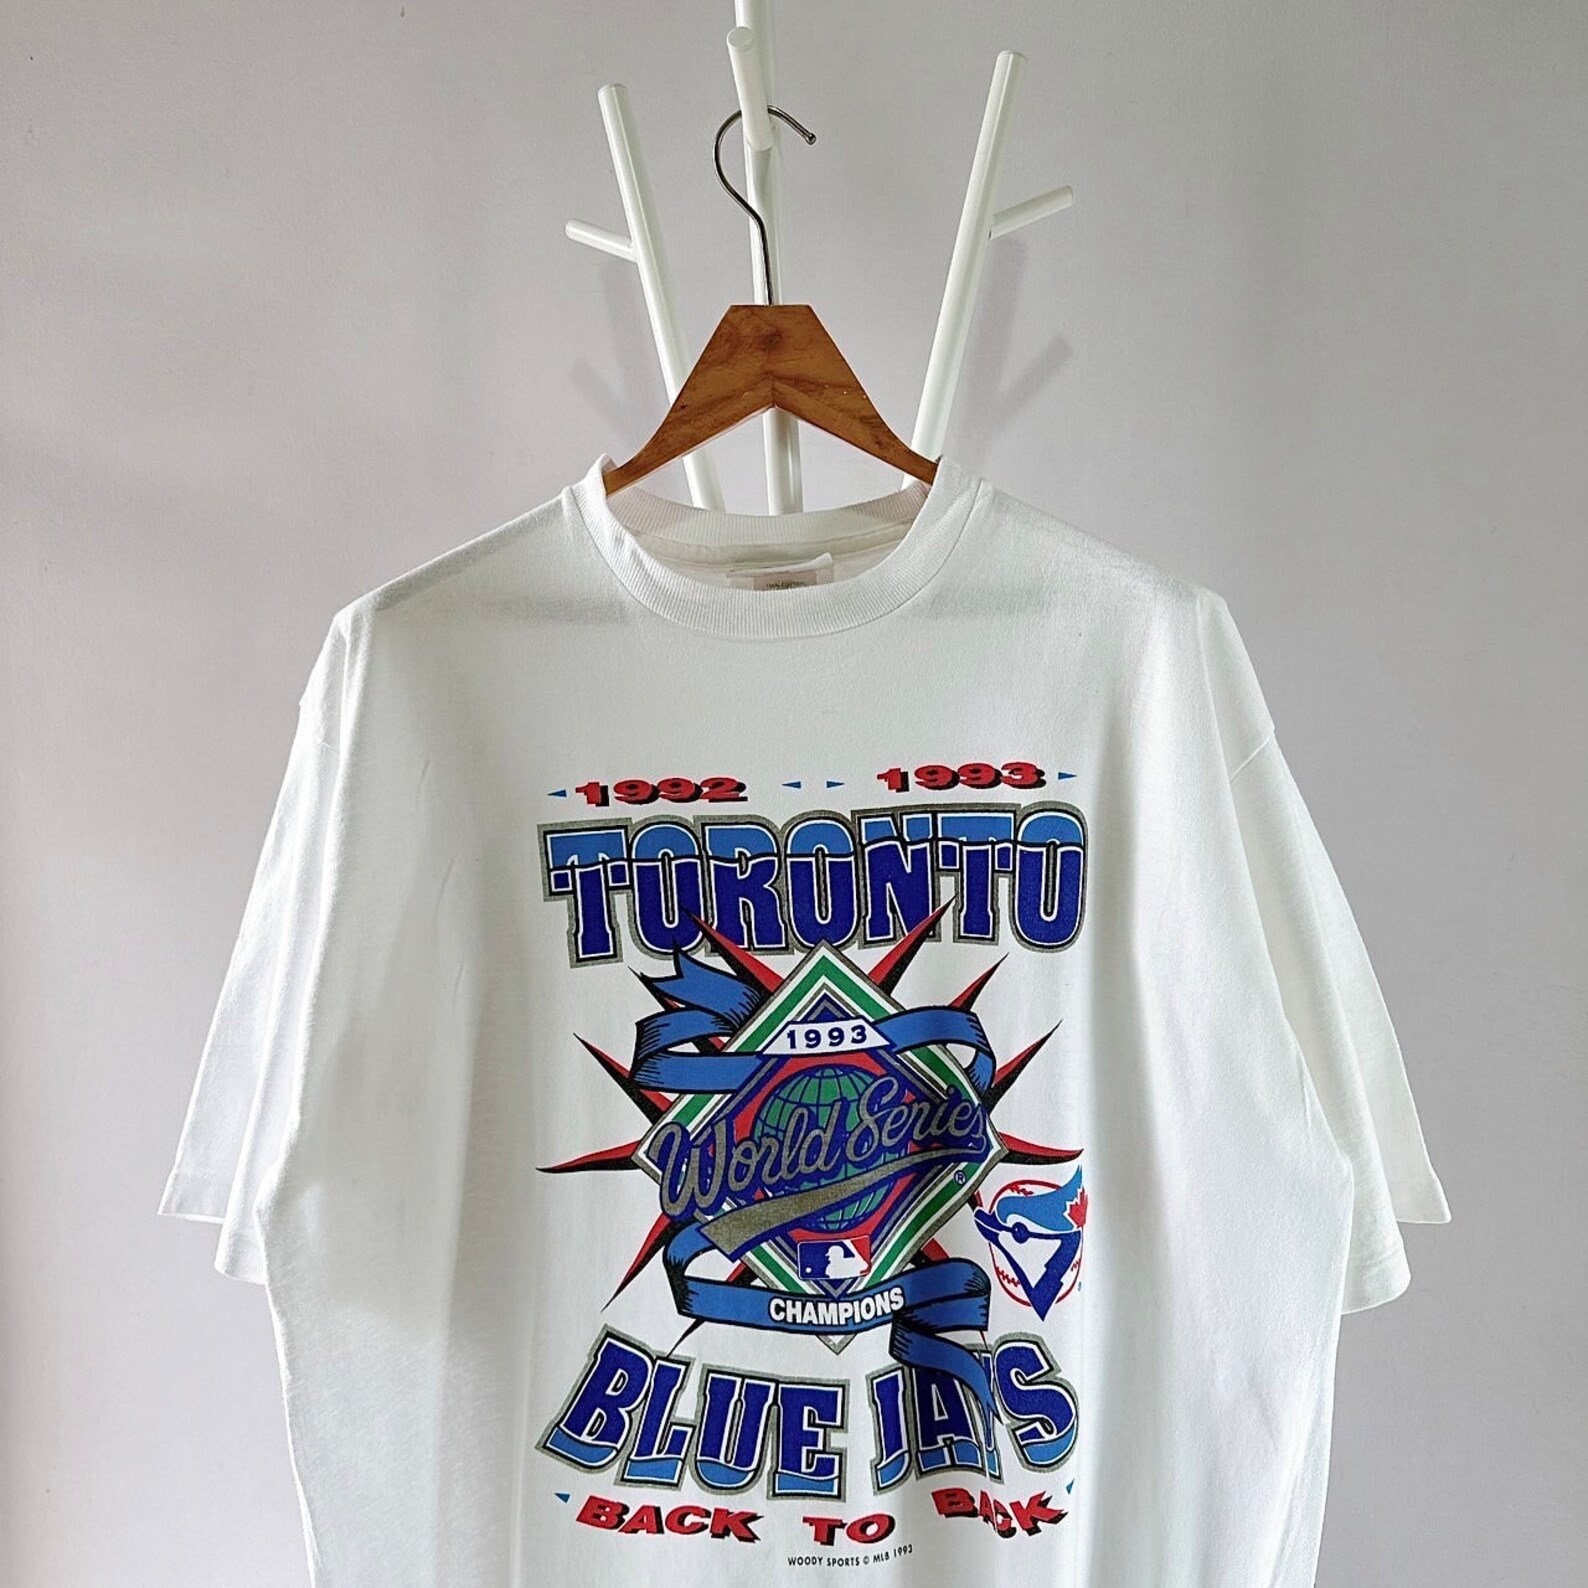 MLB World Tour Toronto Blue Jays logo T-shirt, hoodie, sweater, long sleeve  and tank top